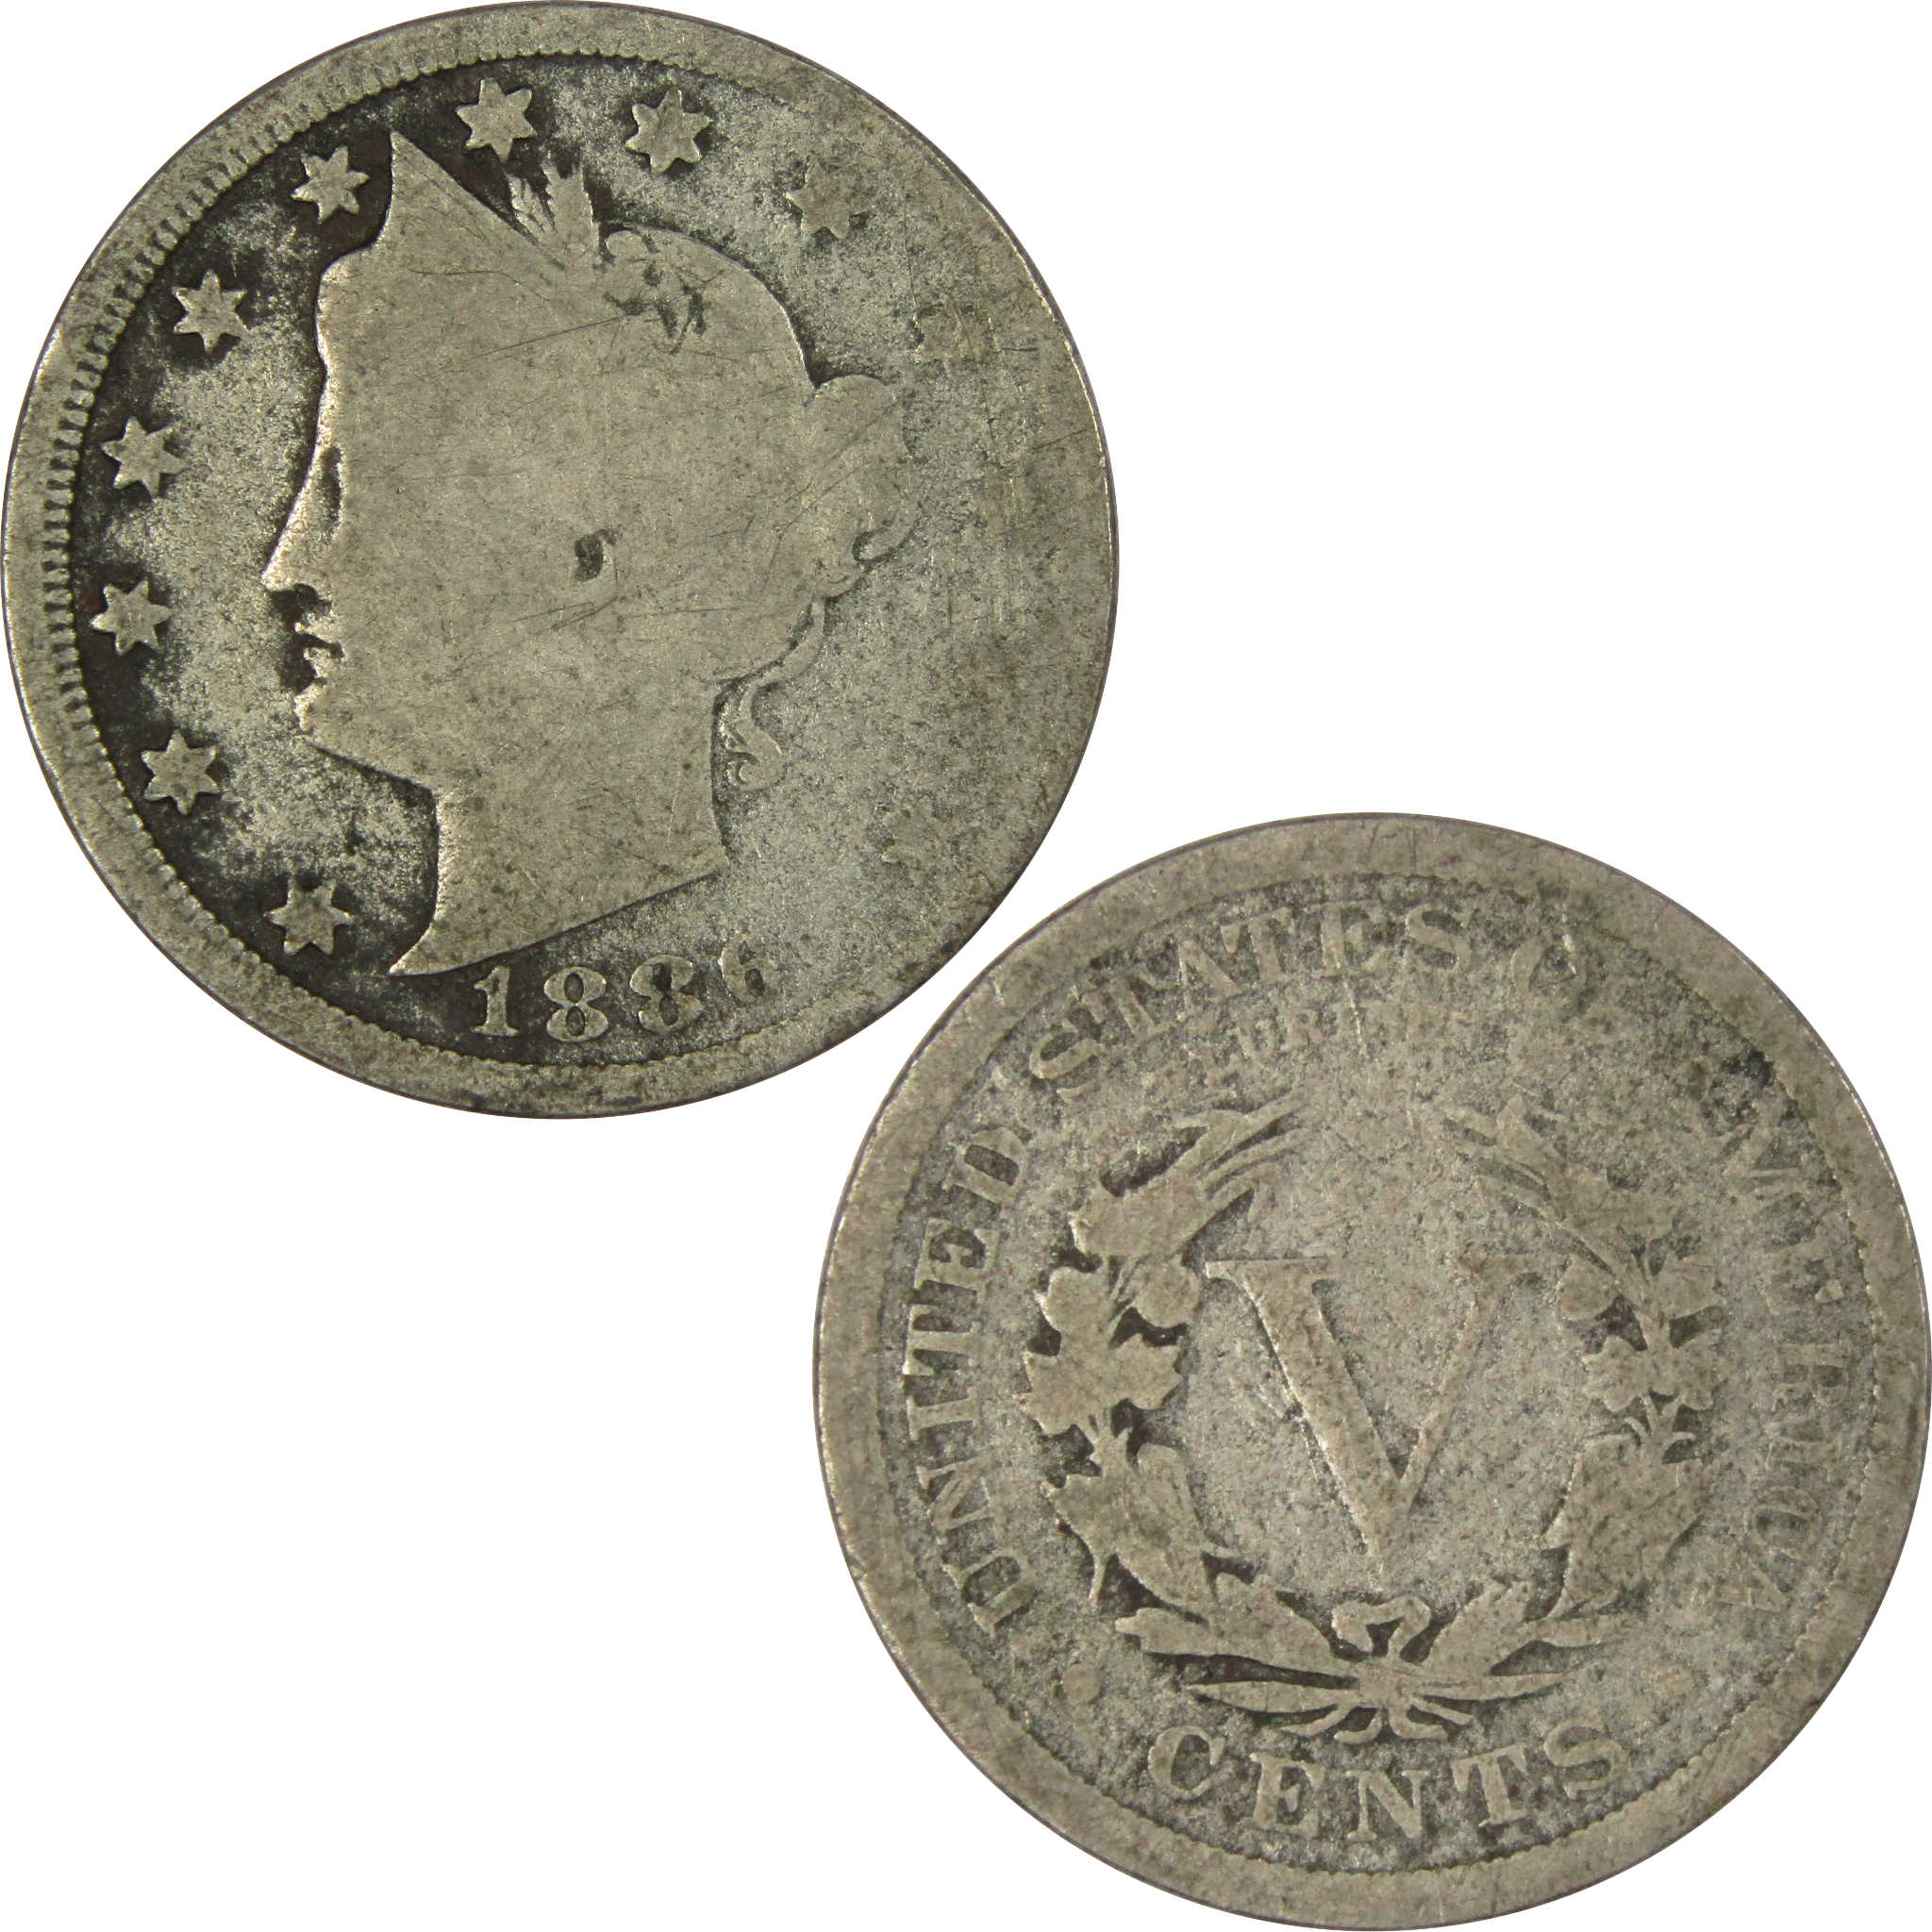 1886 Liberty Head V Nickel 5 Cent Piece AG About Good 5c SKU:IPC6577